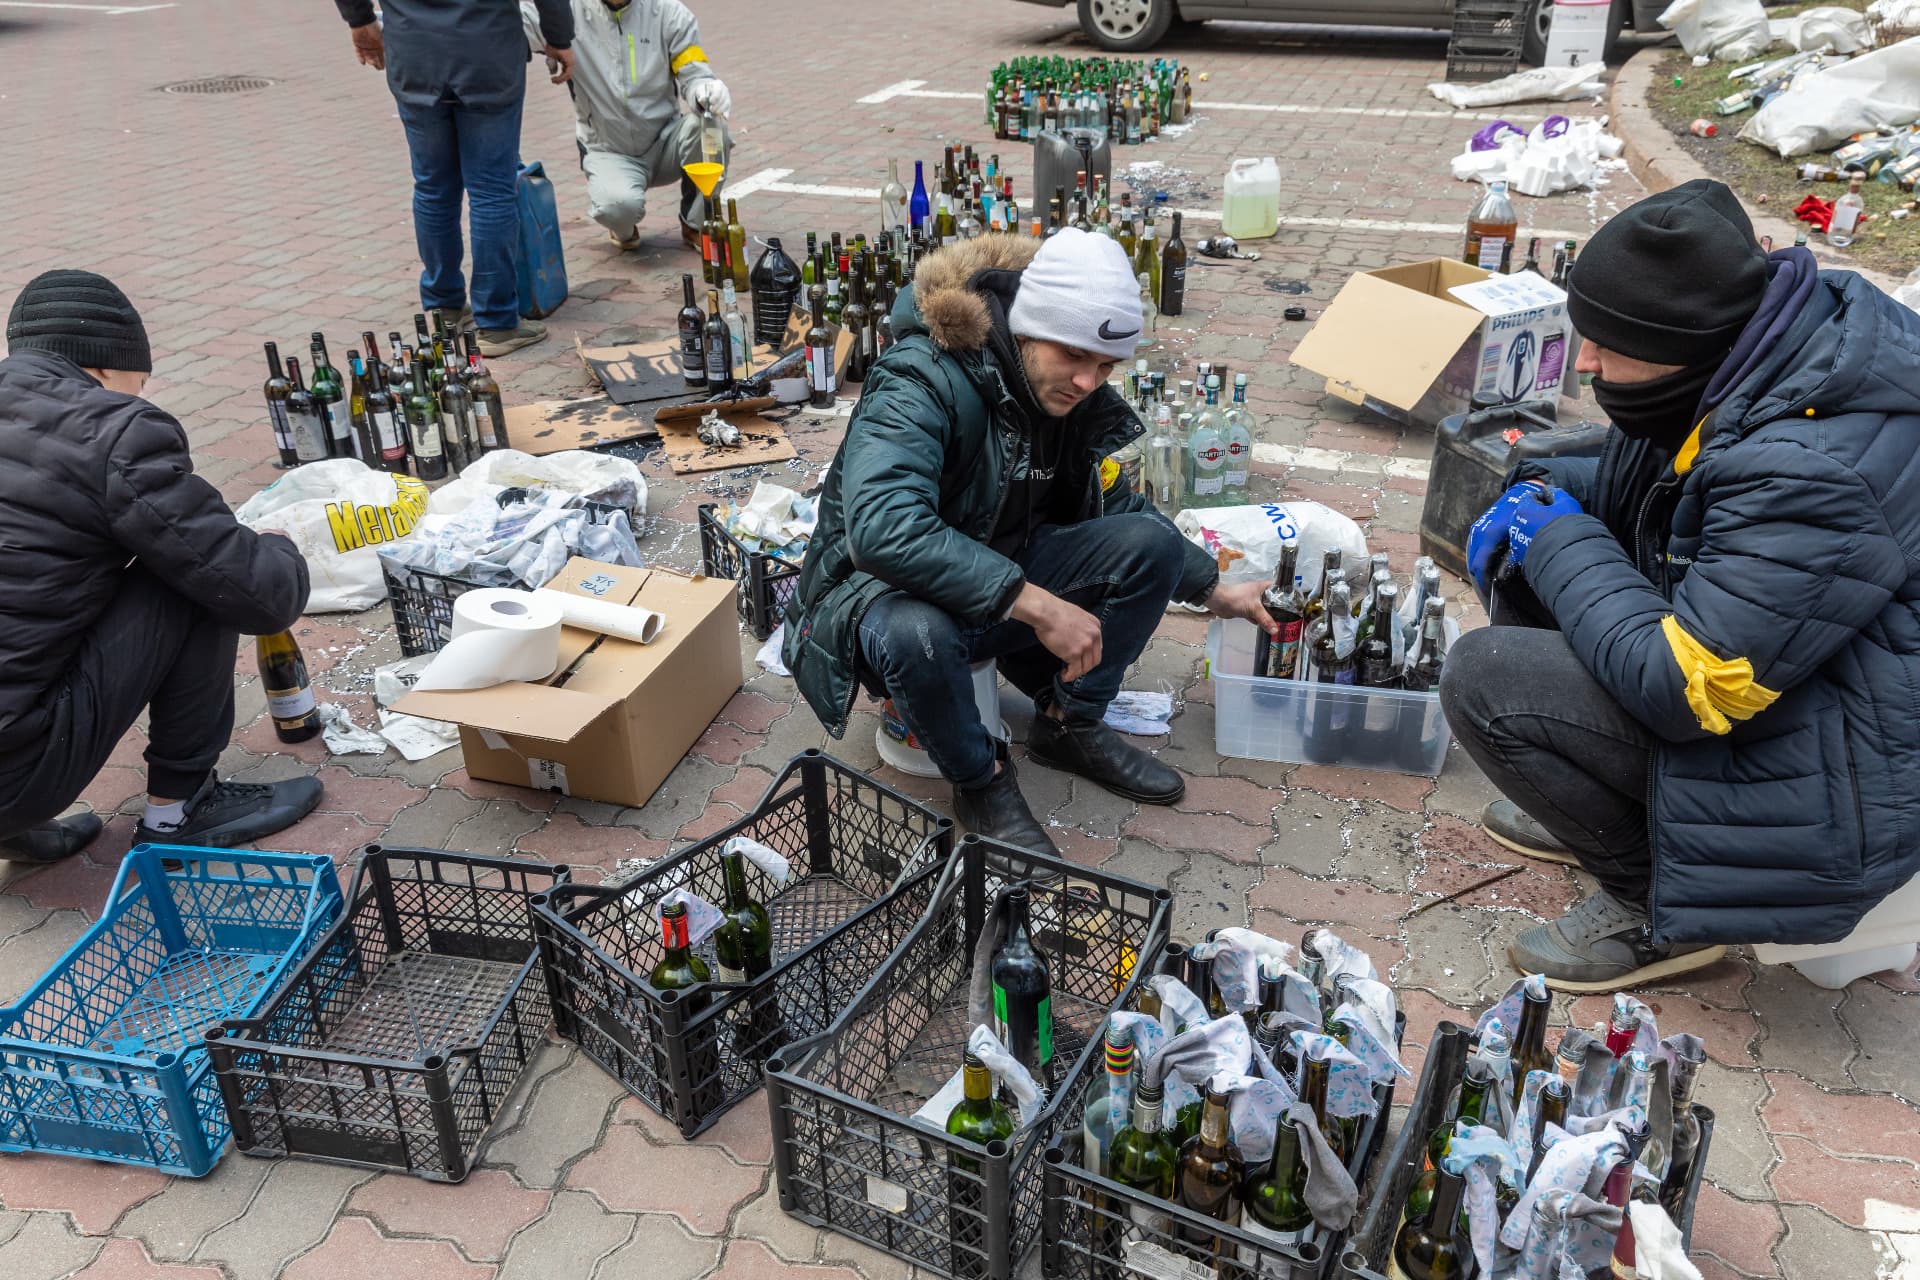 Members of Kyiv territorial defense making Molotov cocktails